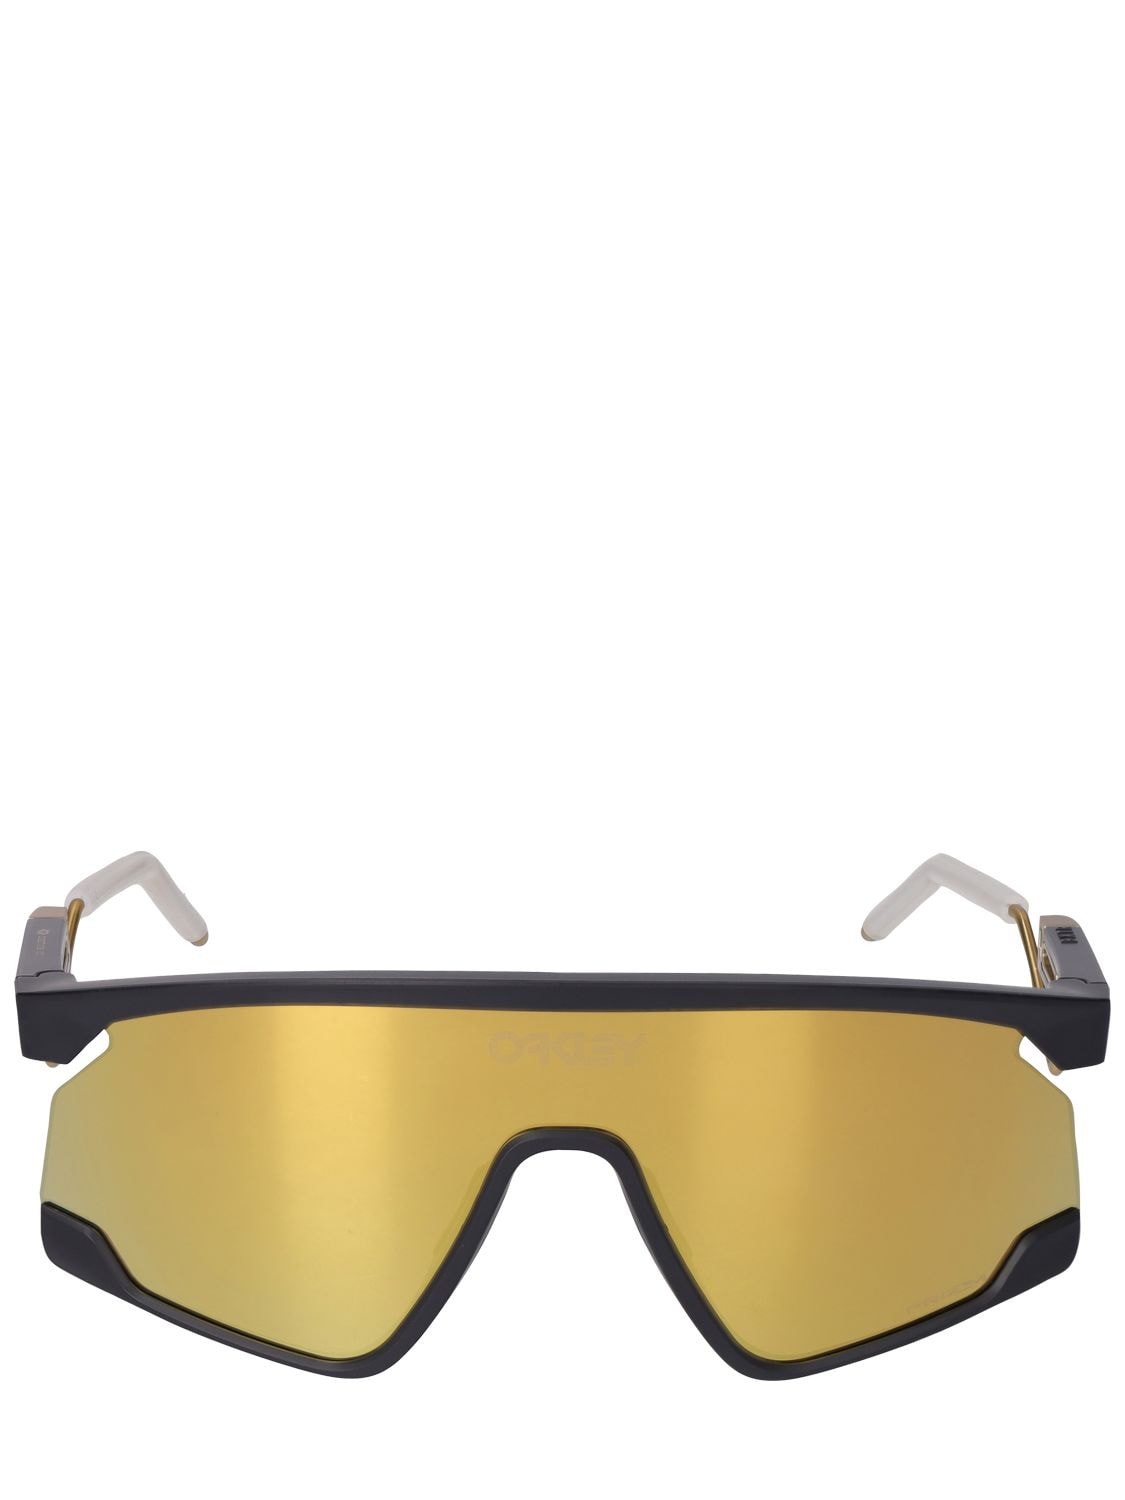 Image of Bxtr Prizm Mask Sunglasses